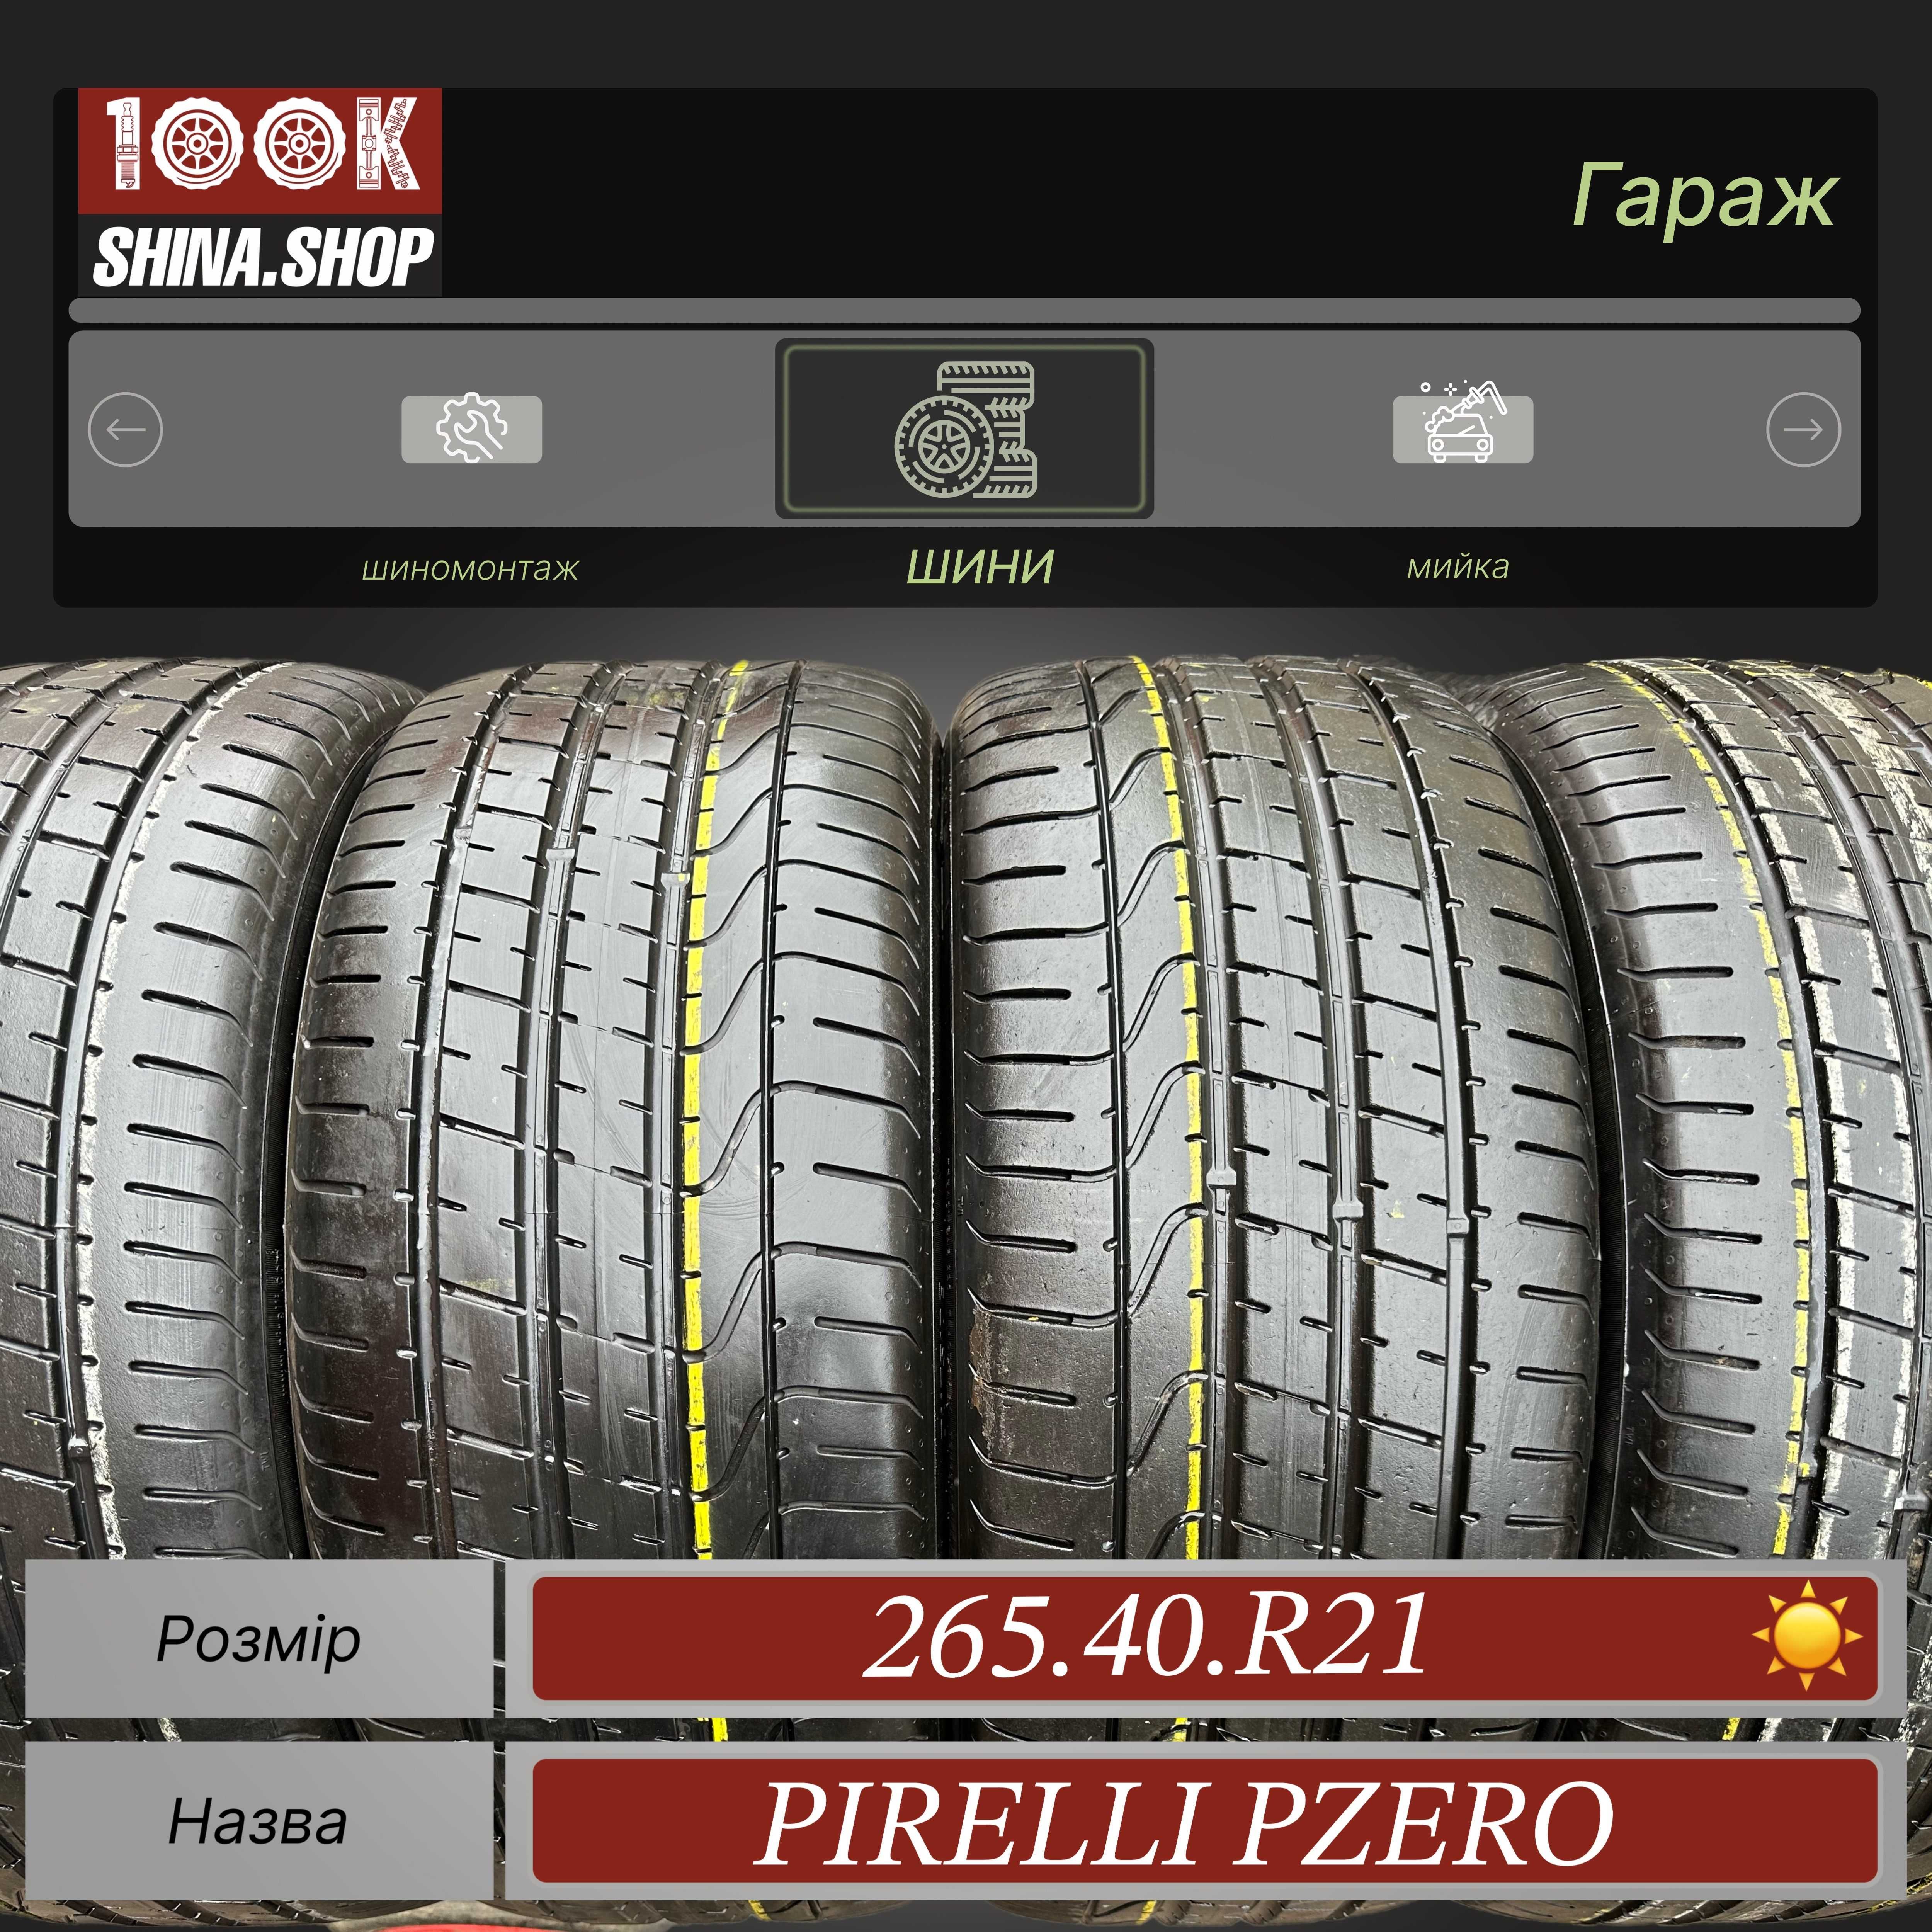 Шины БУ 265 40 R 21 Pirelli Pzero  Резина лето